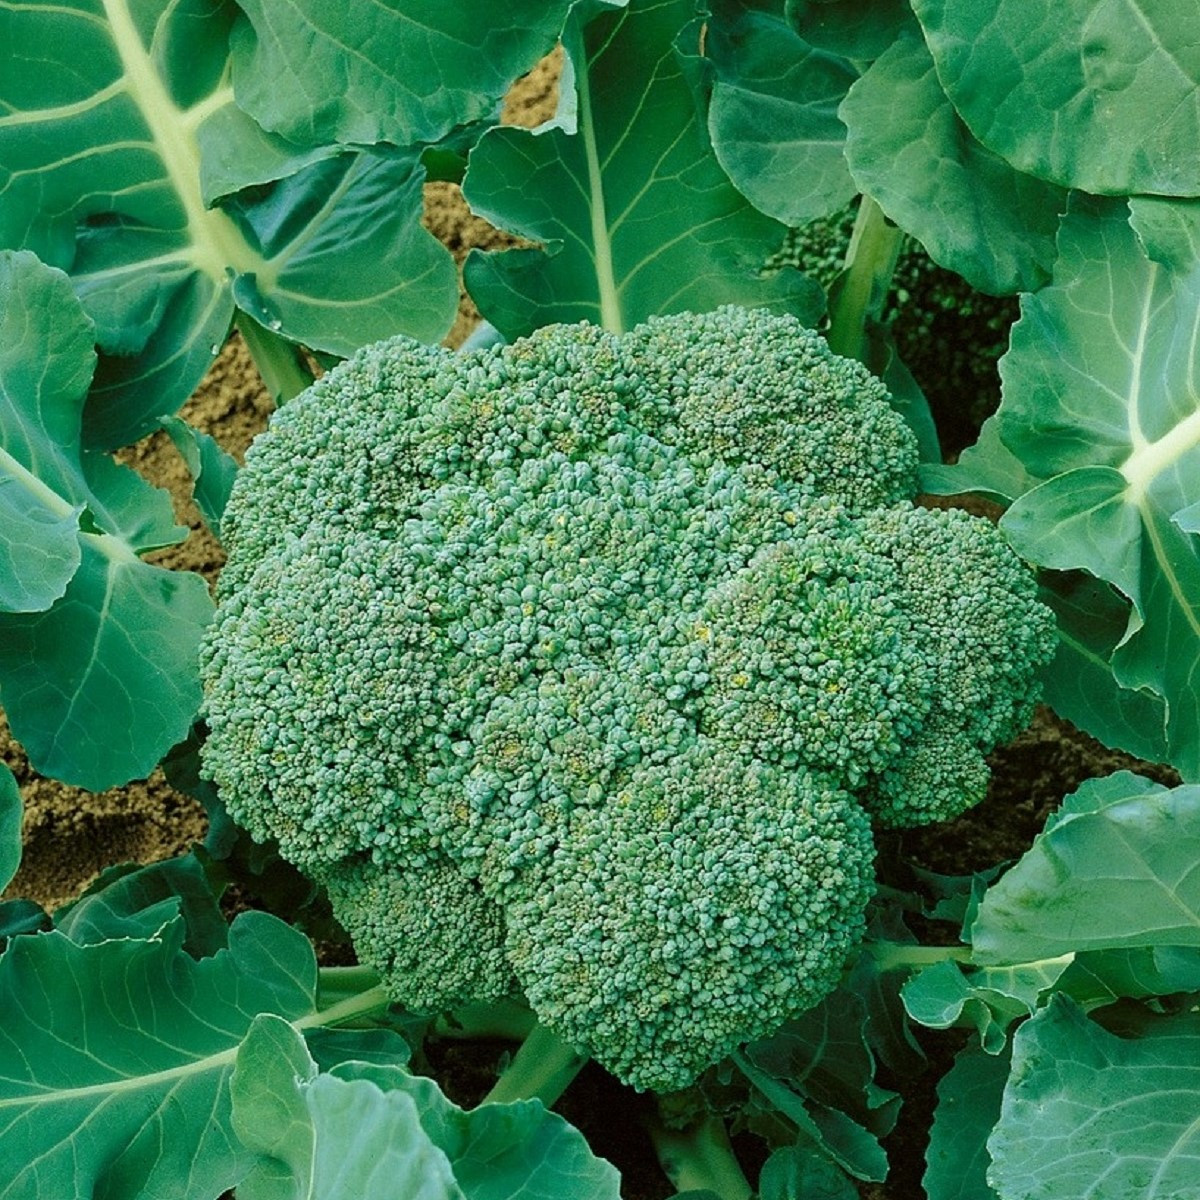 BIO Brokolice Calabrese Natalino - Brassica oleracea L. - bio semena brokolice - 30 ks